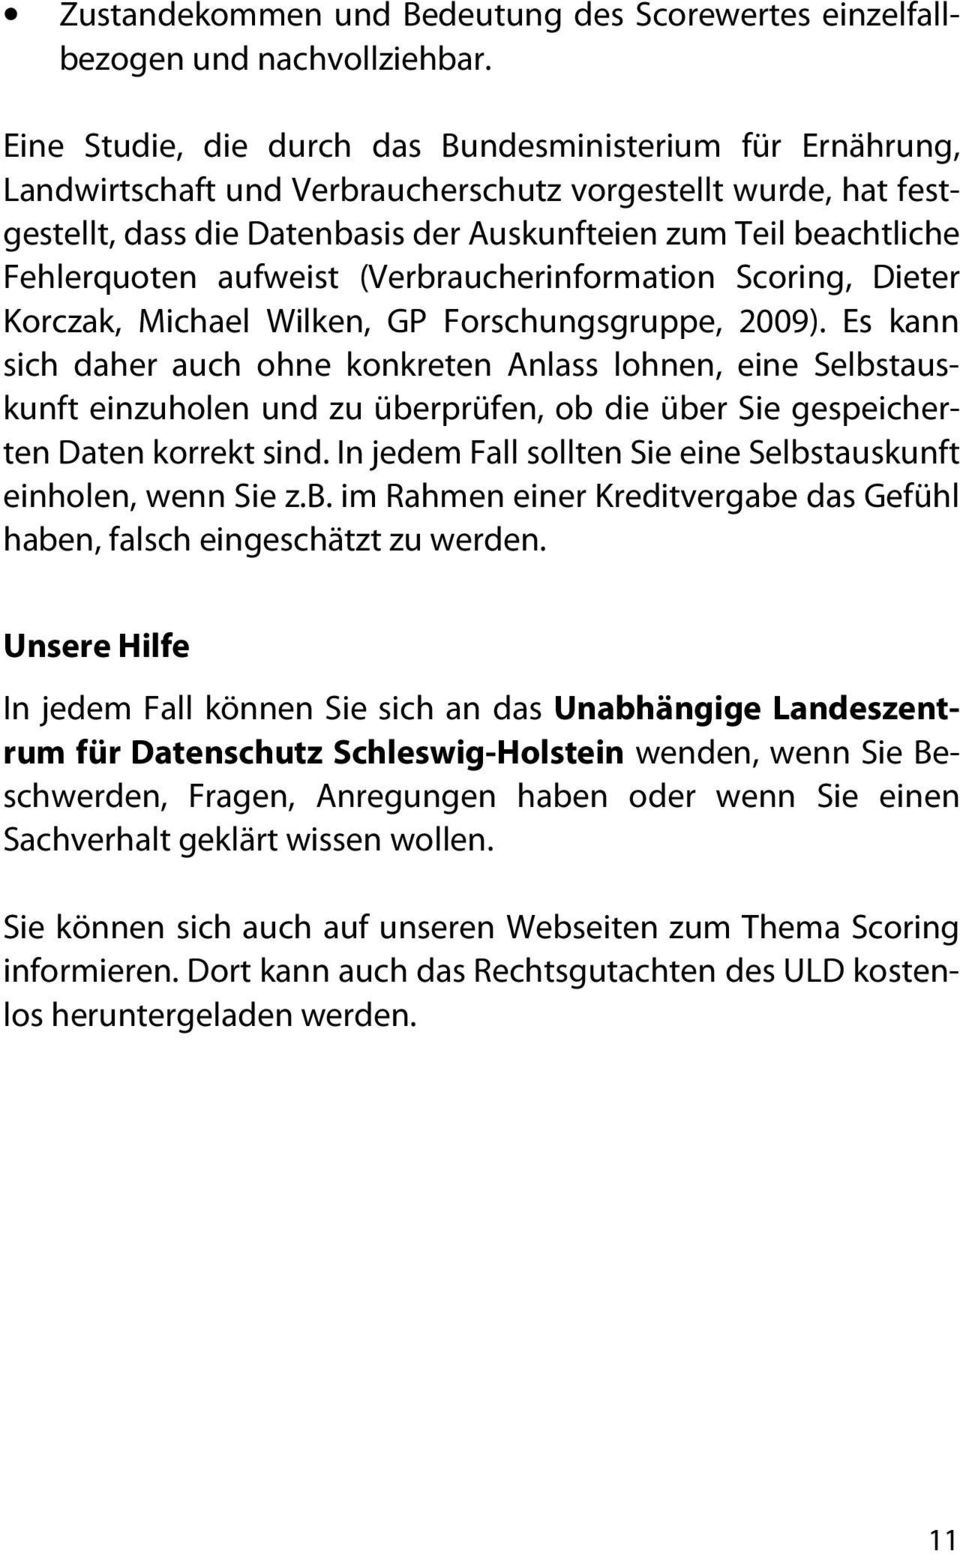 Fehlerquoten aufweist (Verbraucherinformation Scoring, Dieter Korczak, Michael Wilken, GP Forschungsgruppe, 2009).